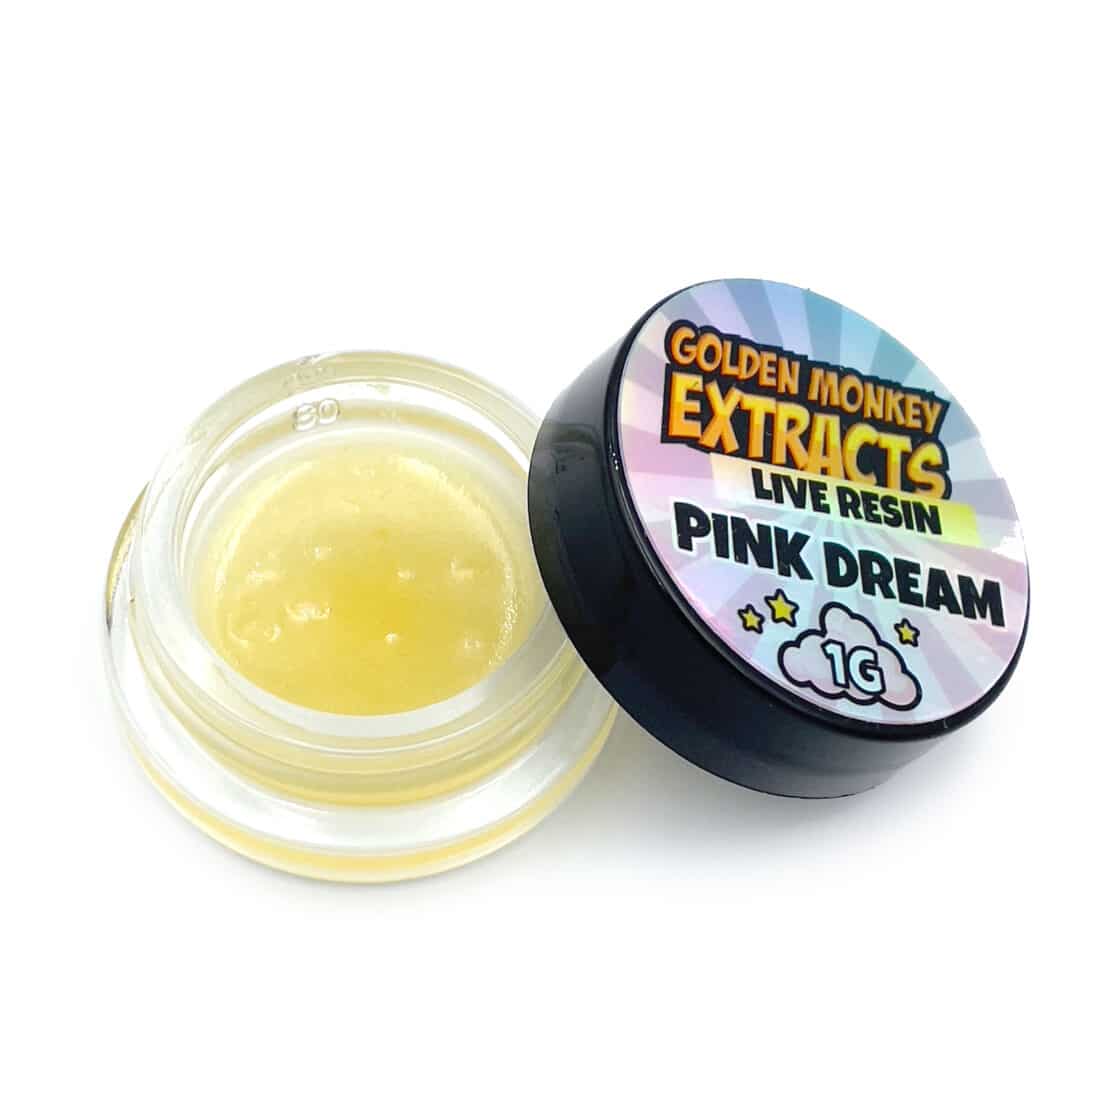 Golden monkey extracts – premium live resin – pink dream